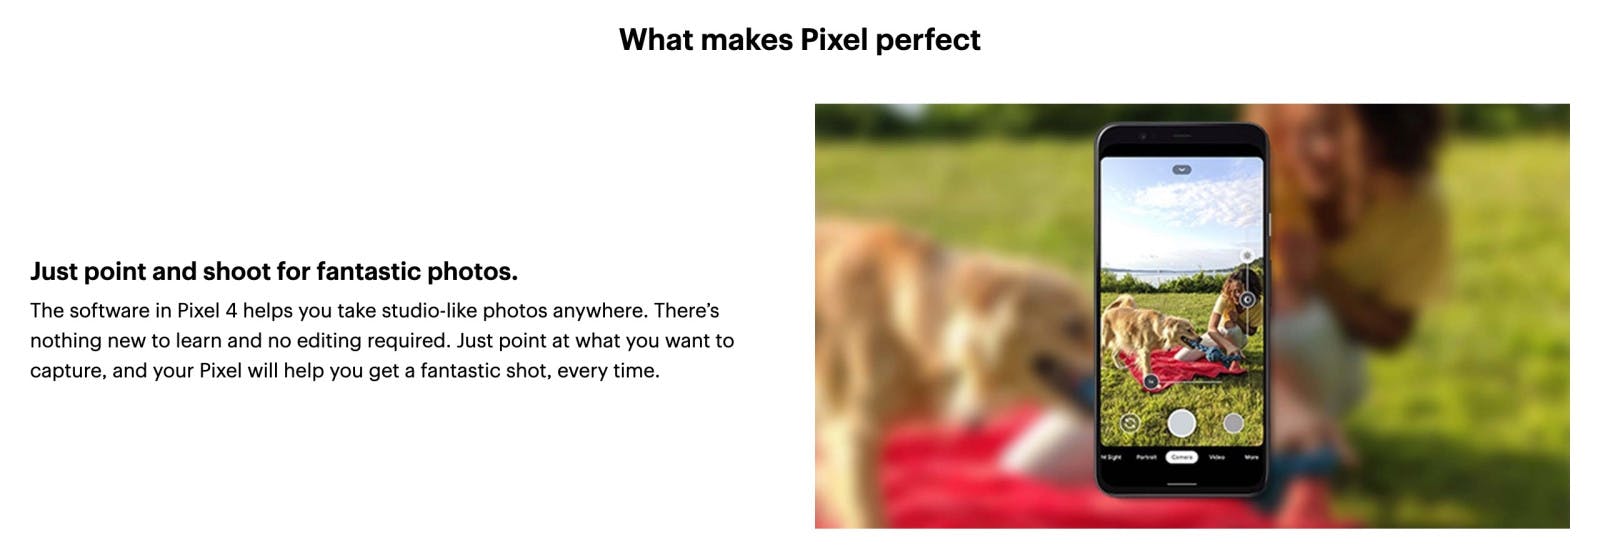 pixel-4-specs-leak-8